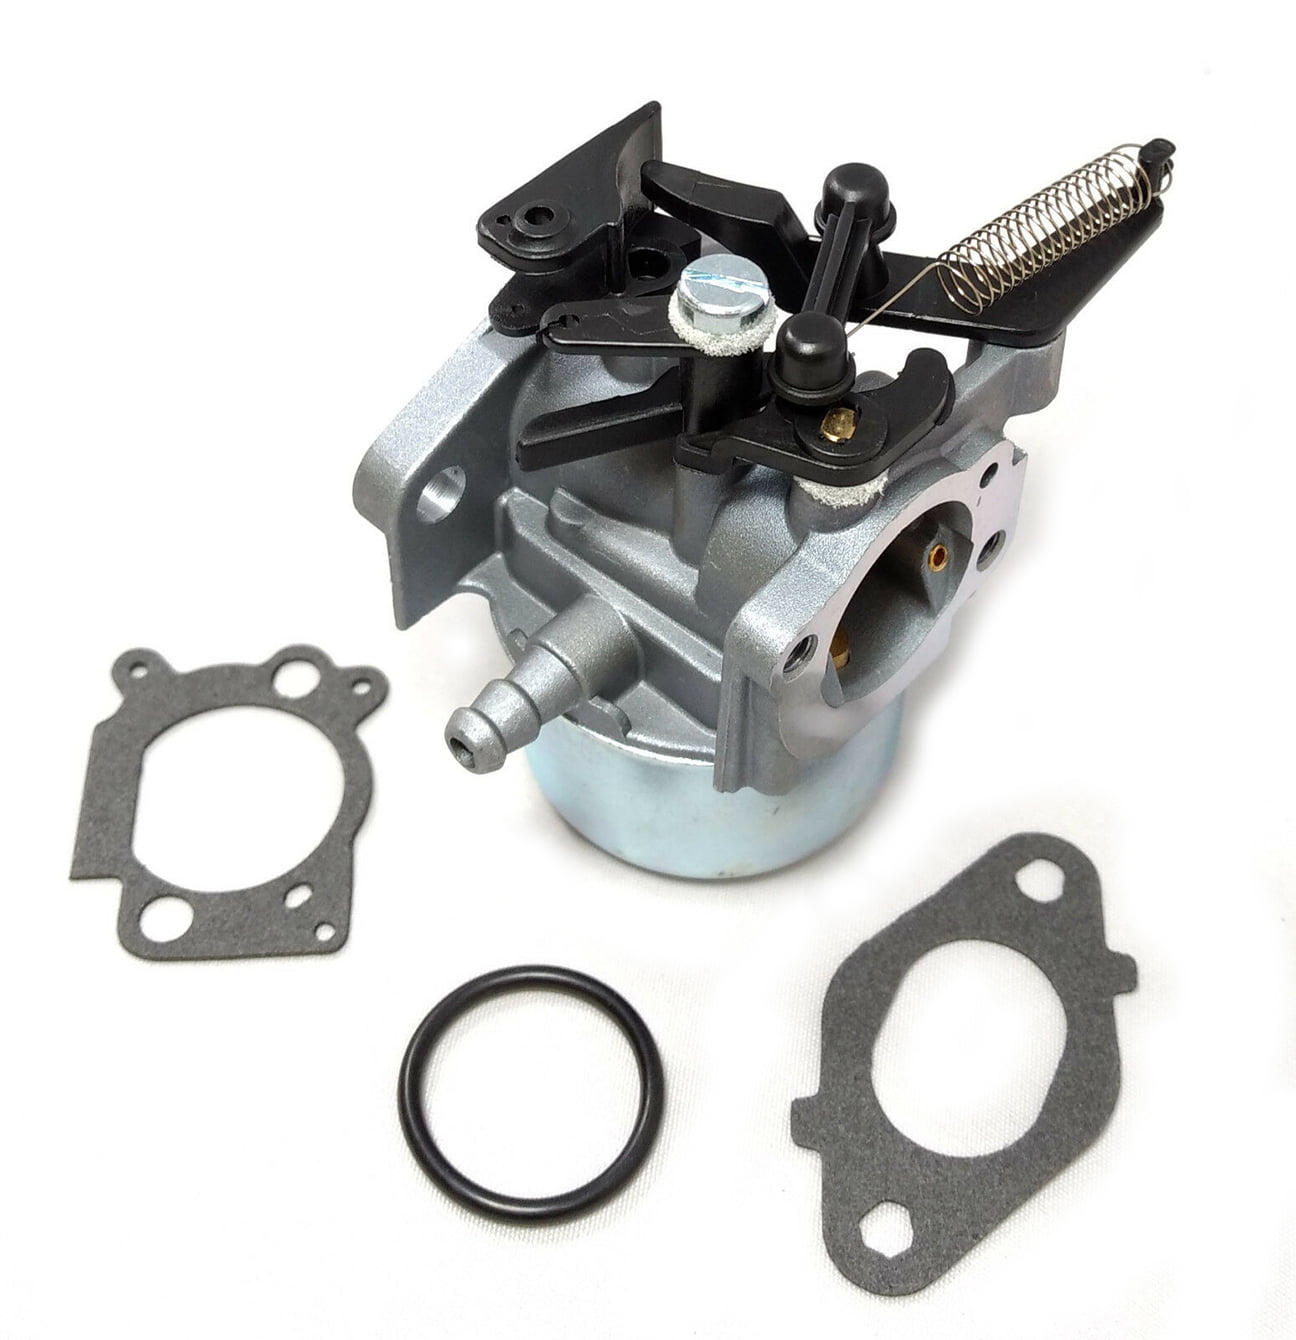 New Carburetor Carb for Briggs & Stratton 591137 590948 796608 Select 111000 11P000 121000 12Q000 